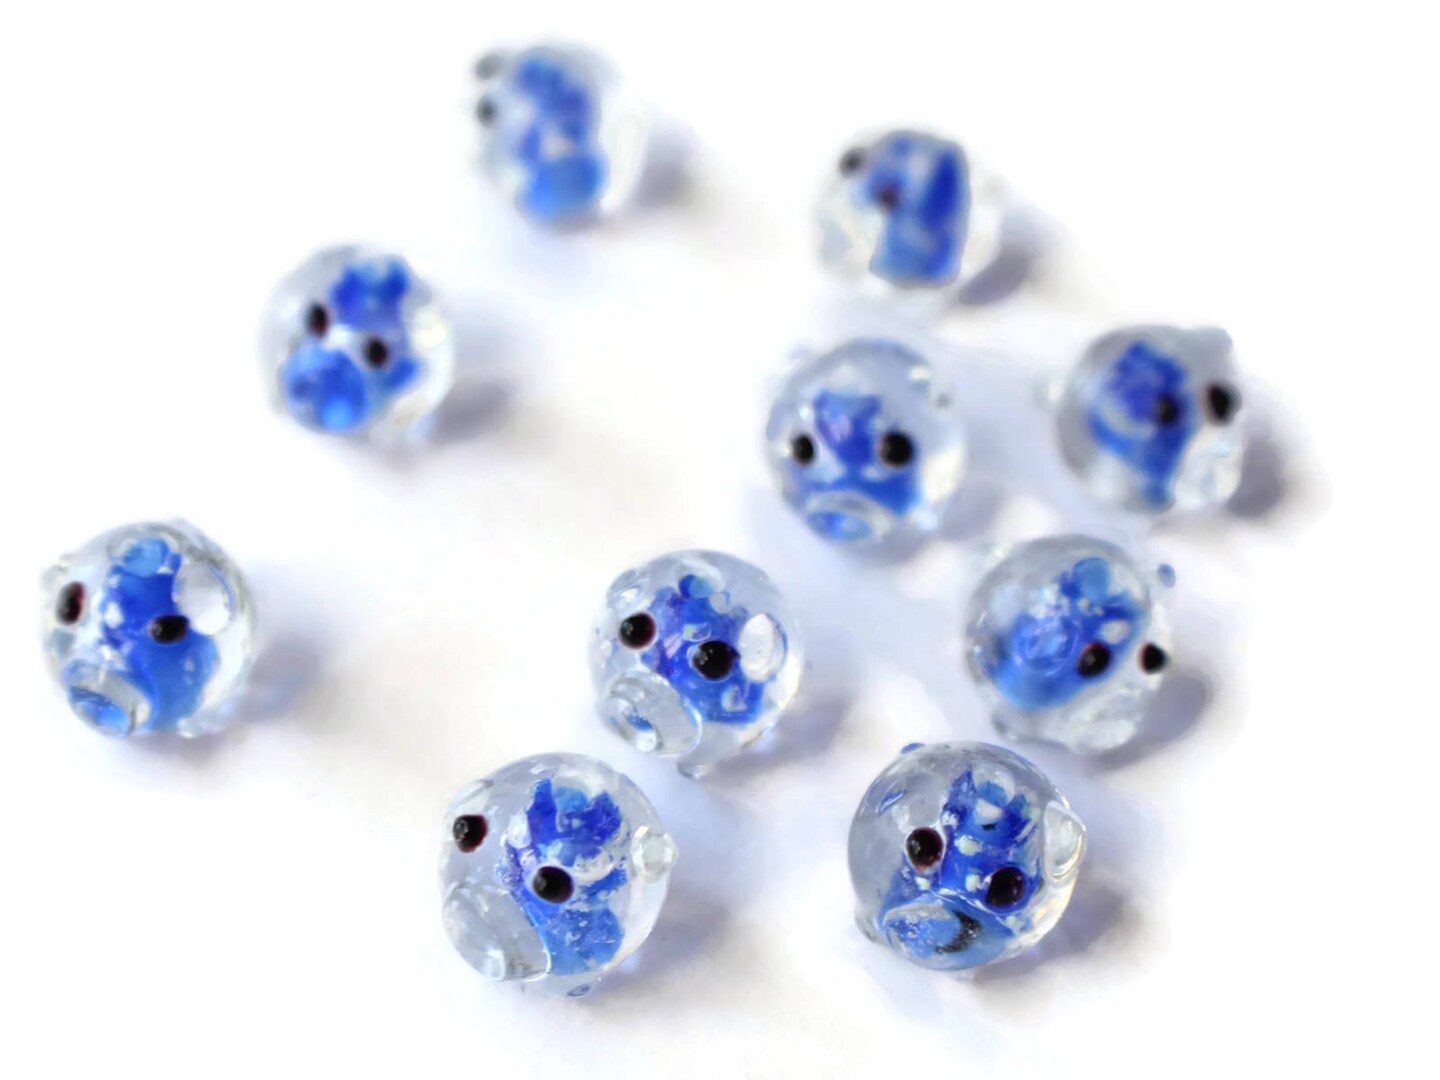 10 Blue Pig Lampwork Glass Beads Glow in the Dark Beads Miniature Farm Animal Beads